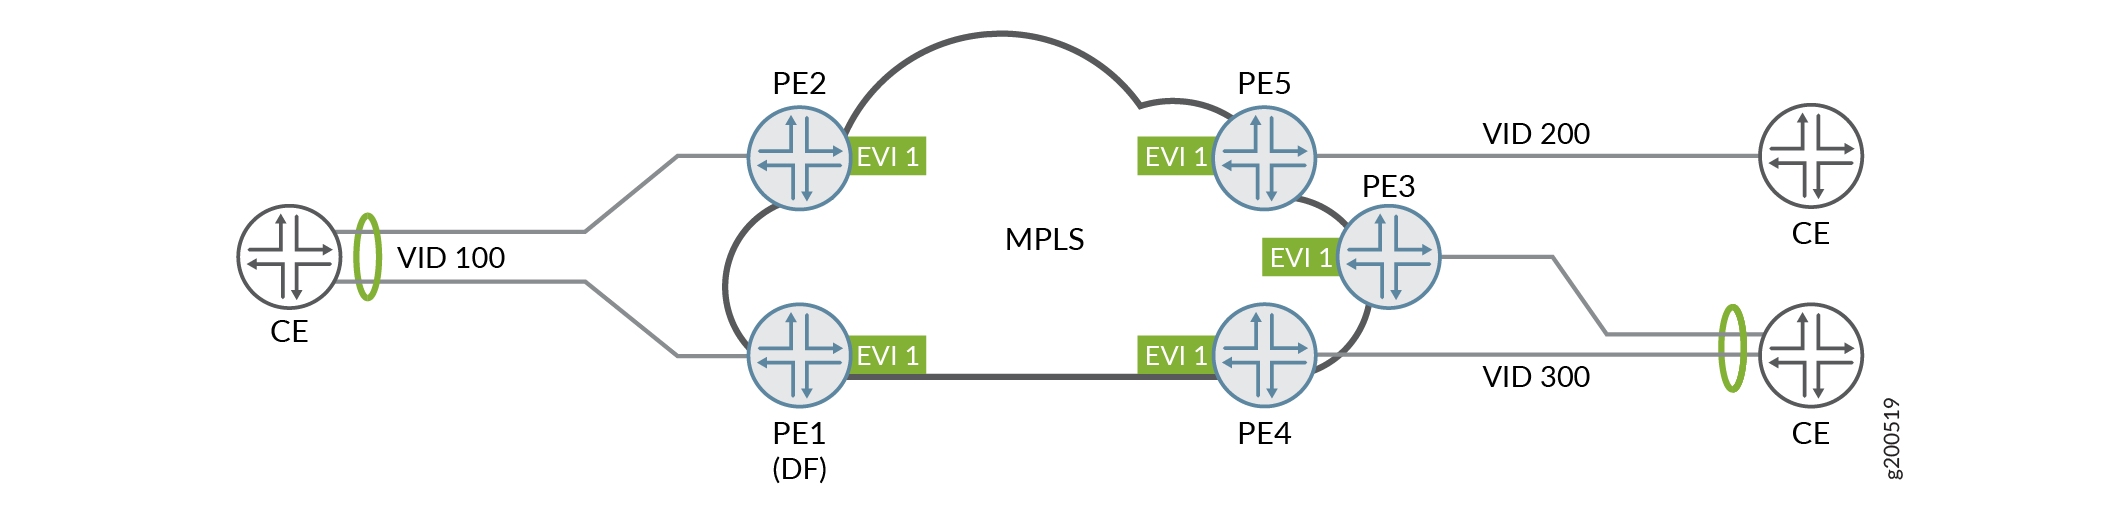 Multiple VIDs with VLAN Translation